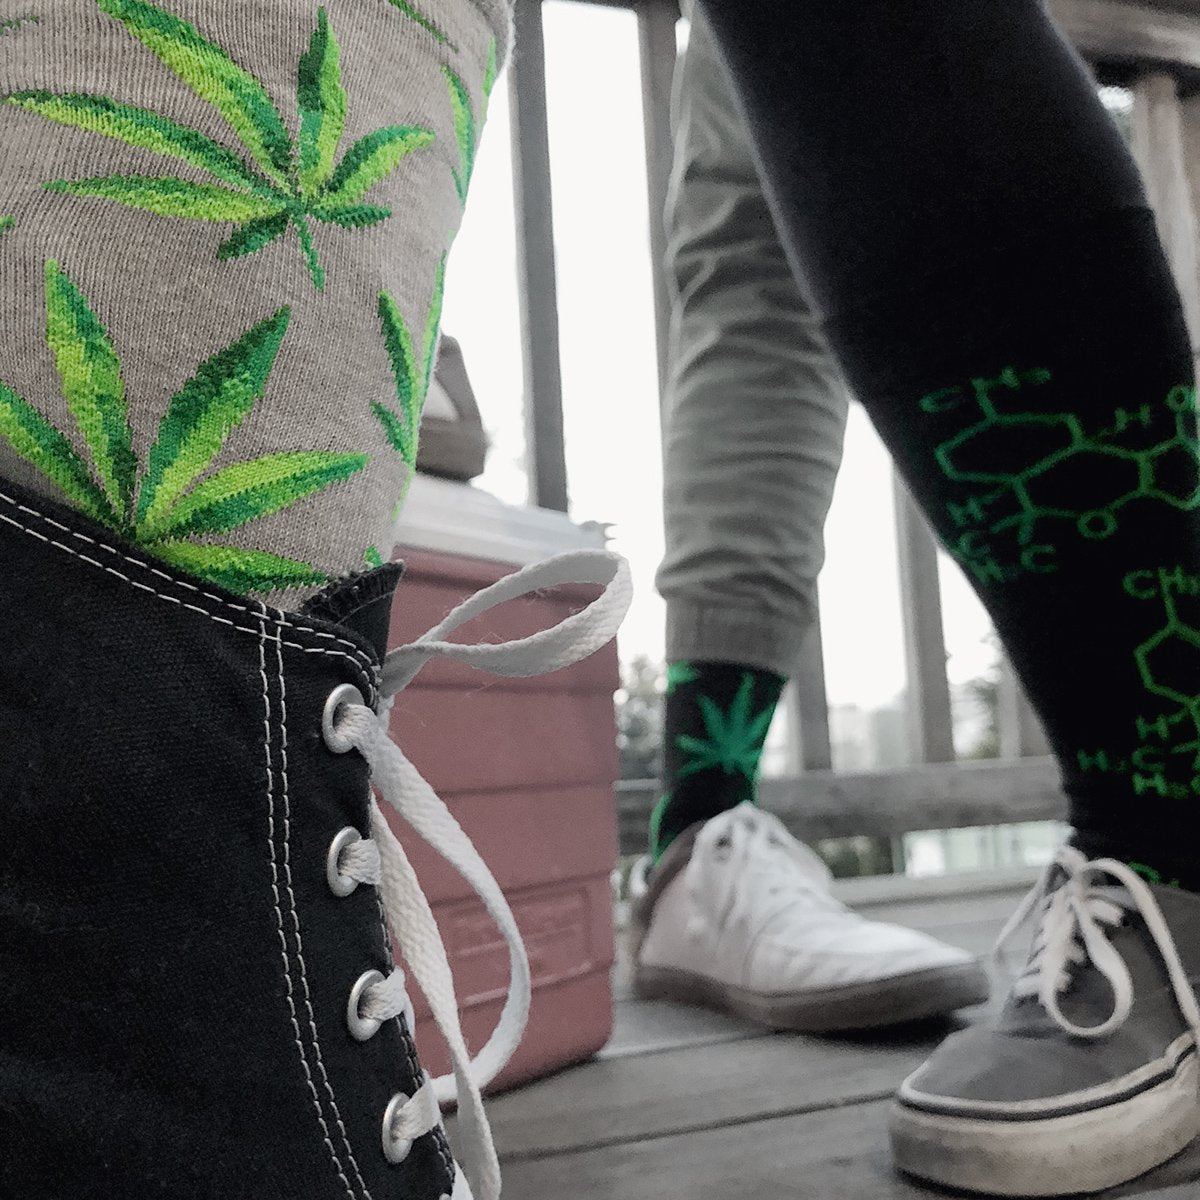 Marijuana-themed pot leaf socks and THC molecule socks.